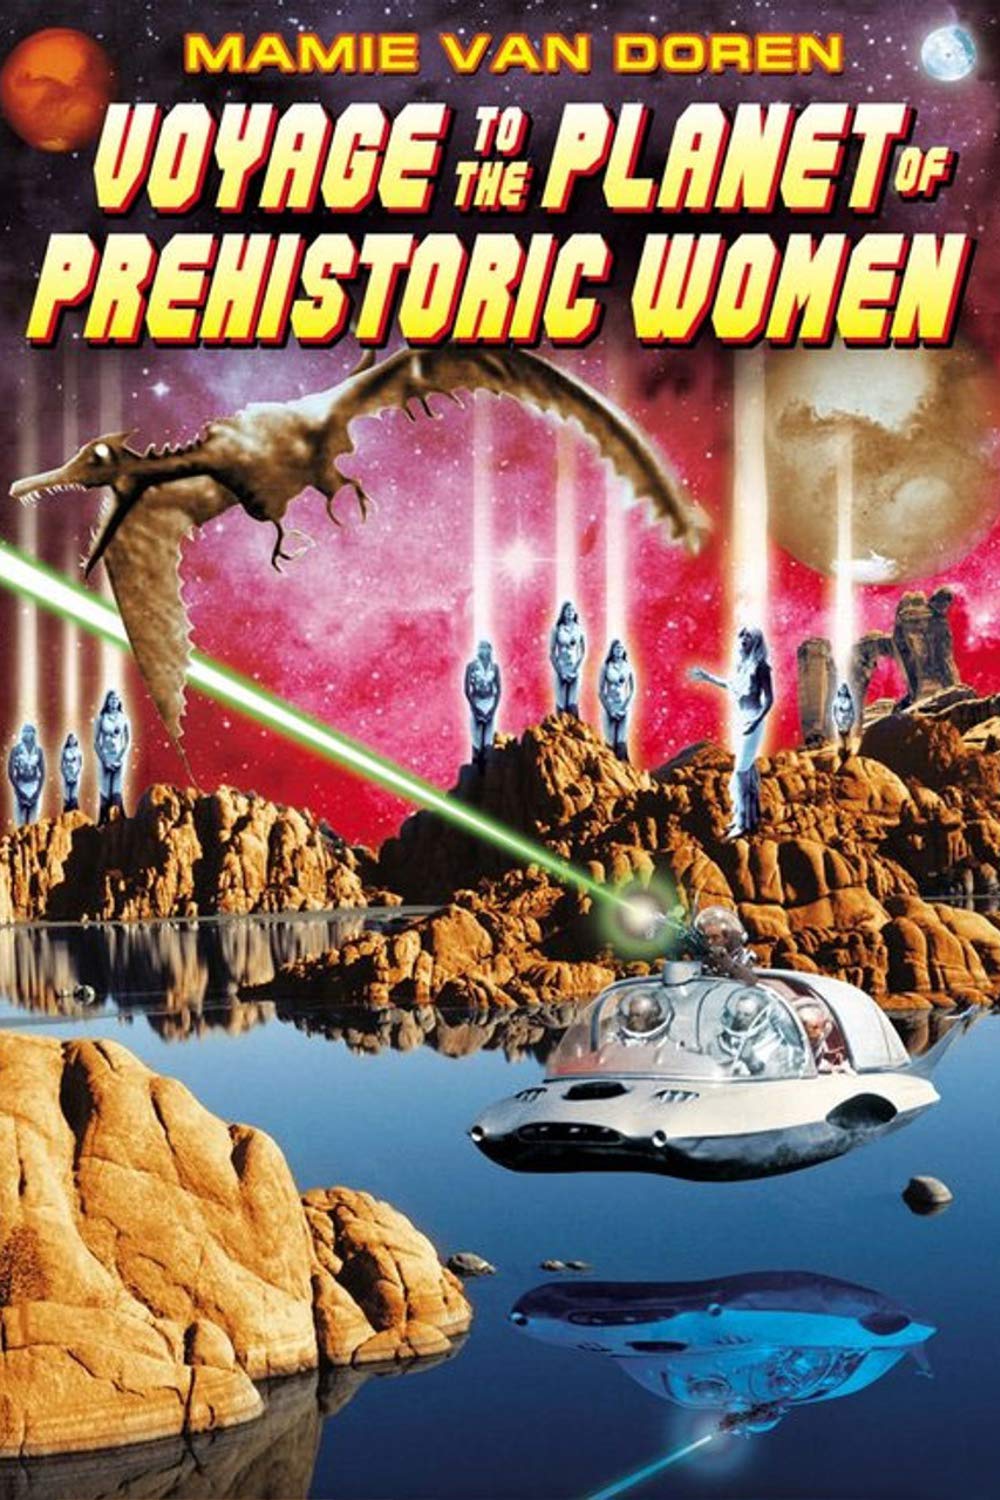 Voyage to the Planet of Prehistoric Women [Sub-ITA] (1968)